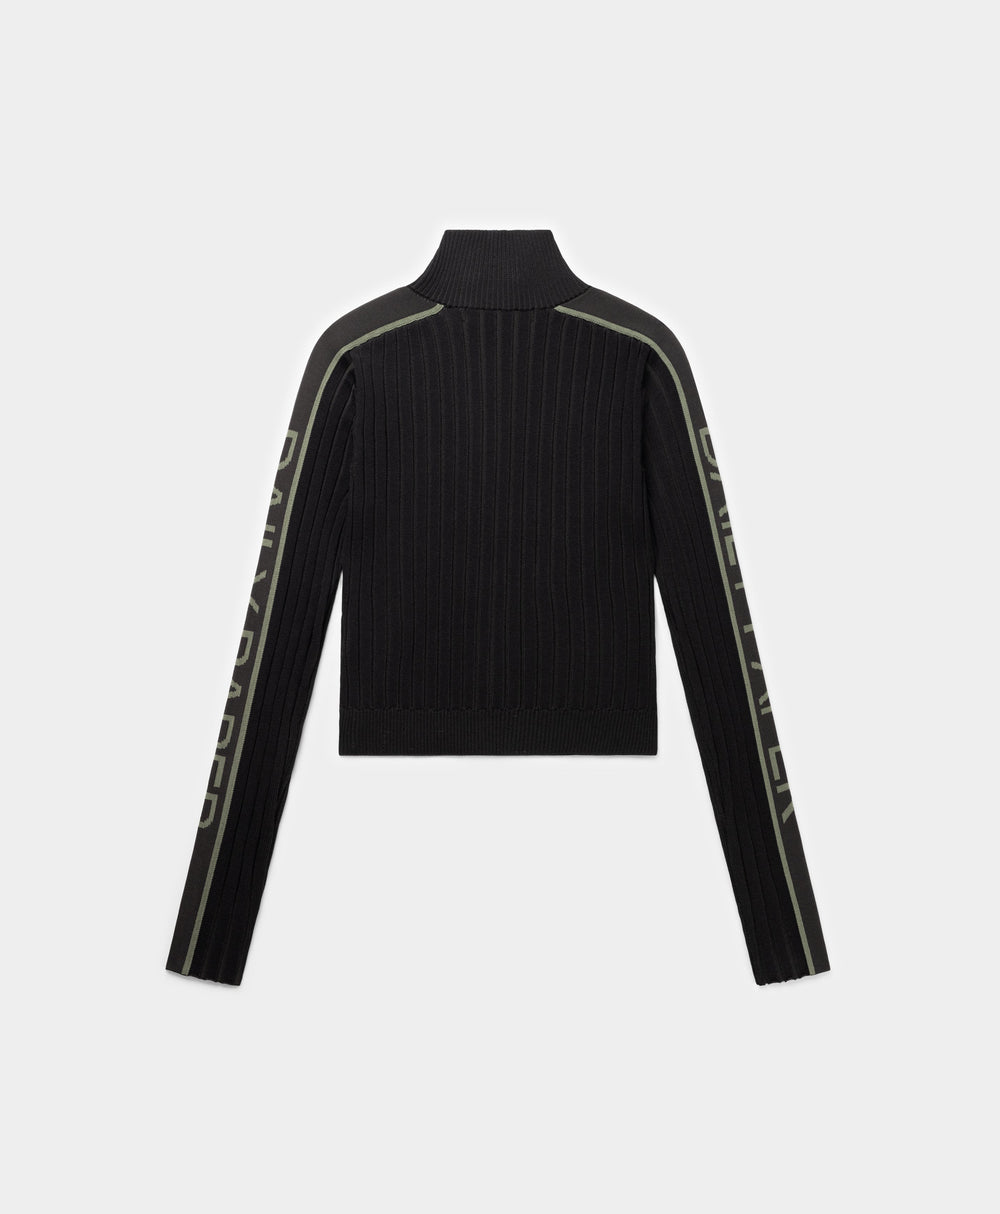 DP - Black Manoa Knit Sweater Cardigan - Packshot - Rear